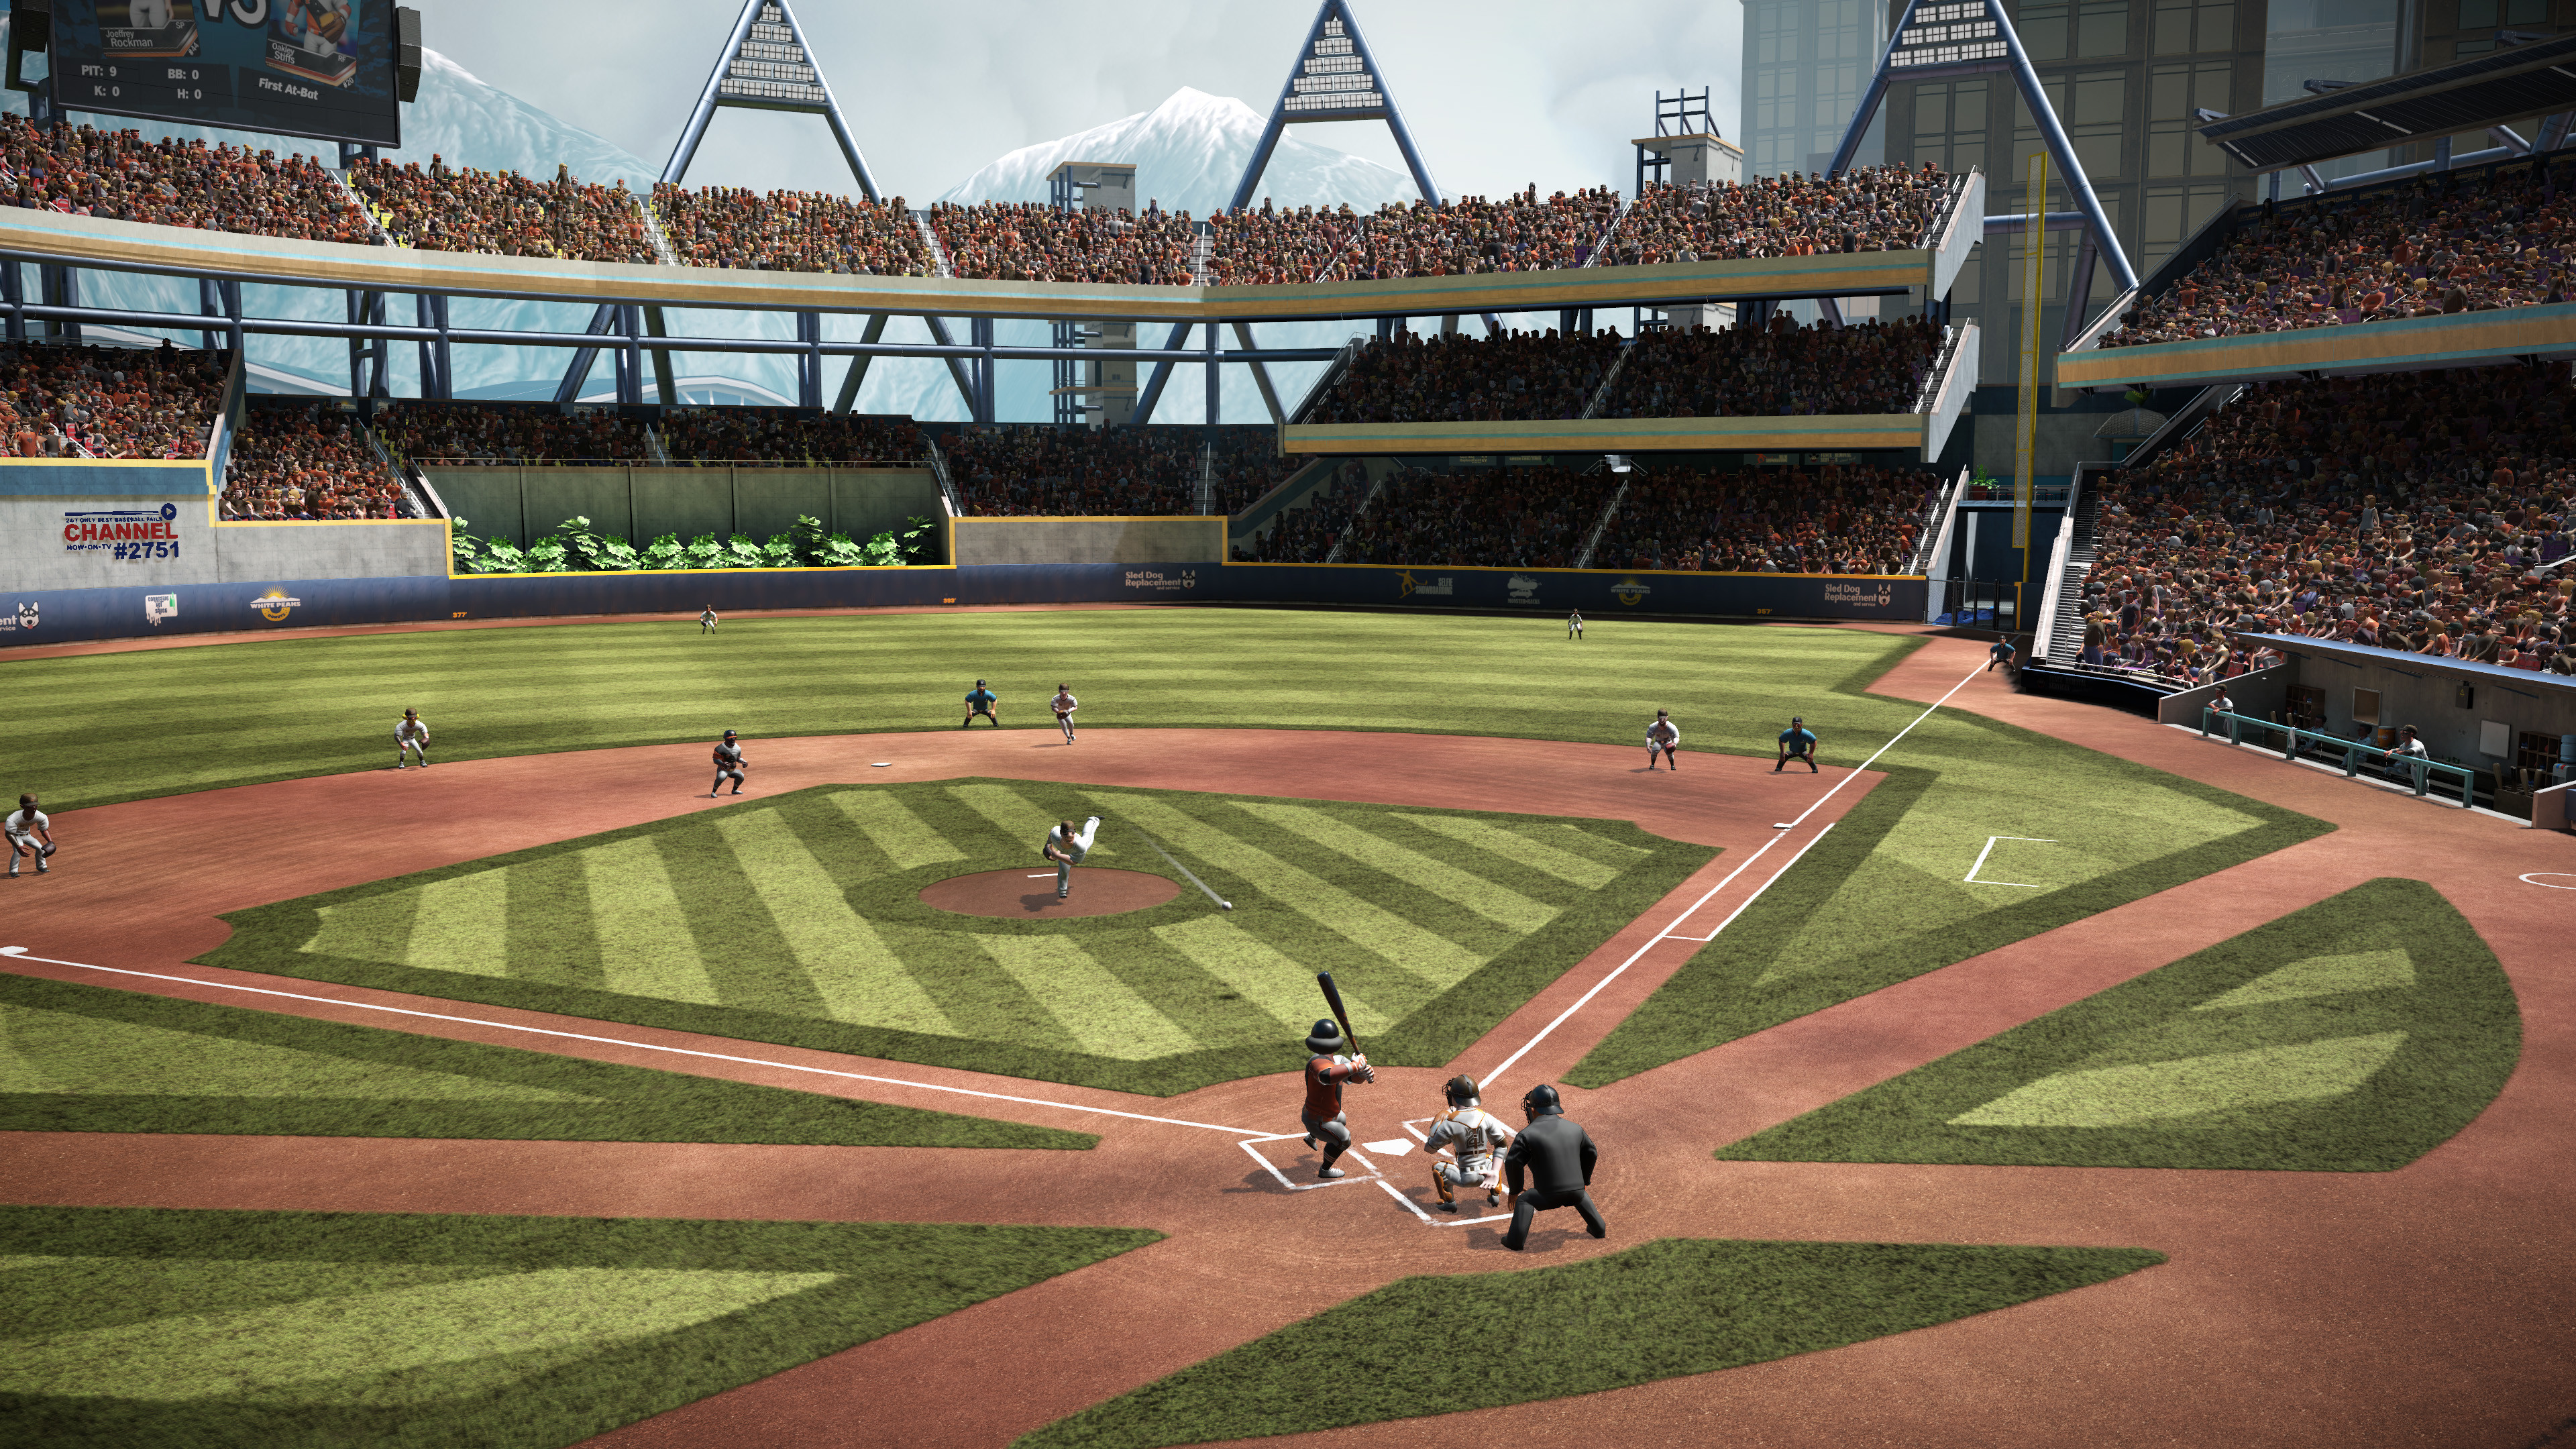 Super Mega Baseball 3 screenshot